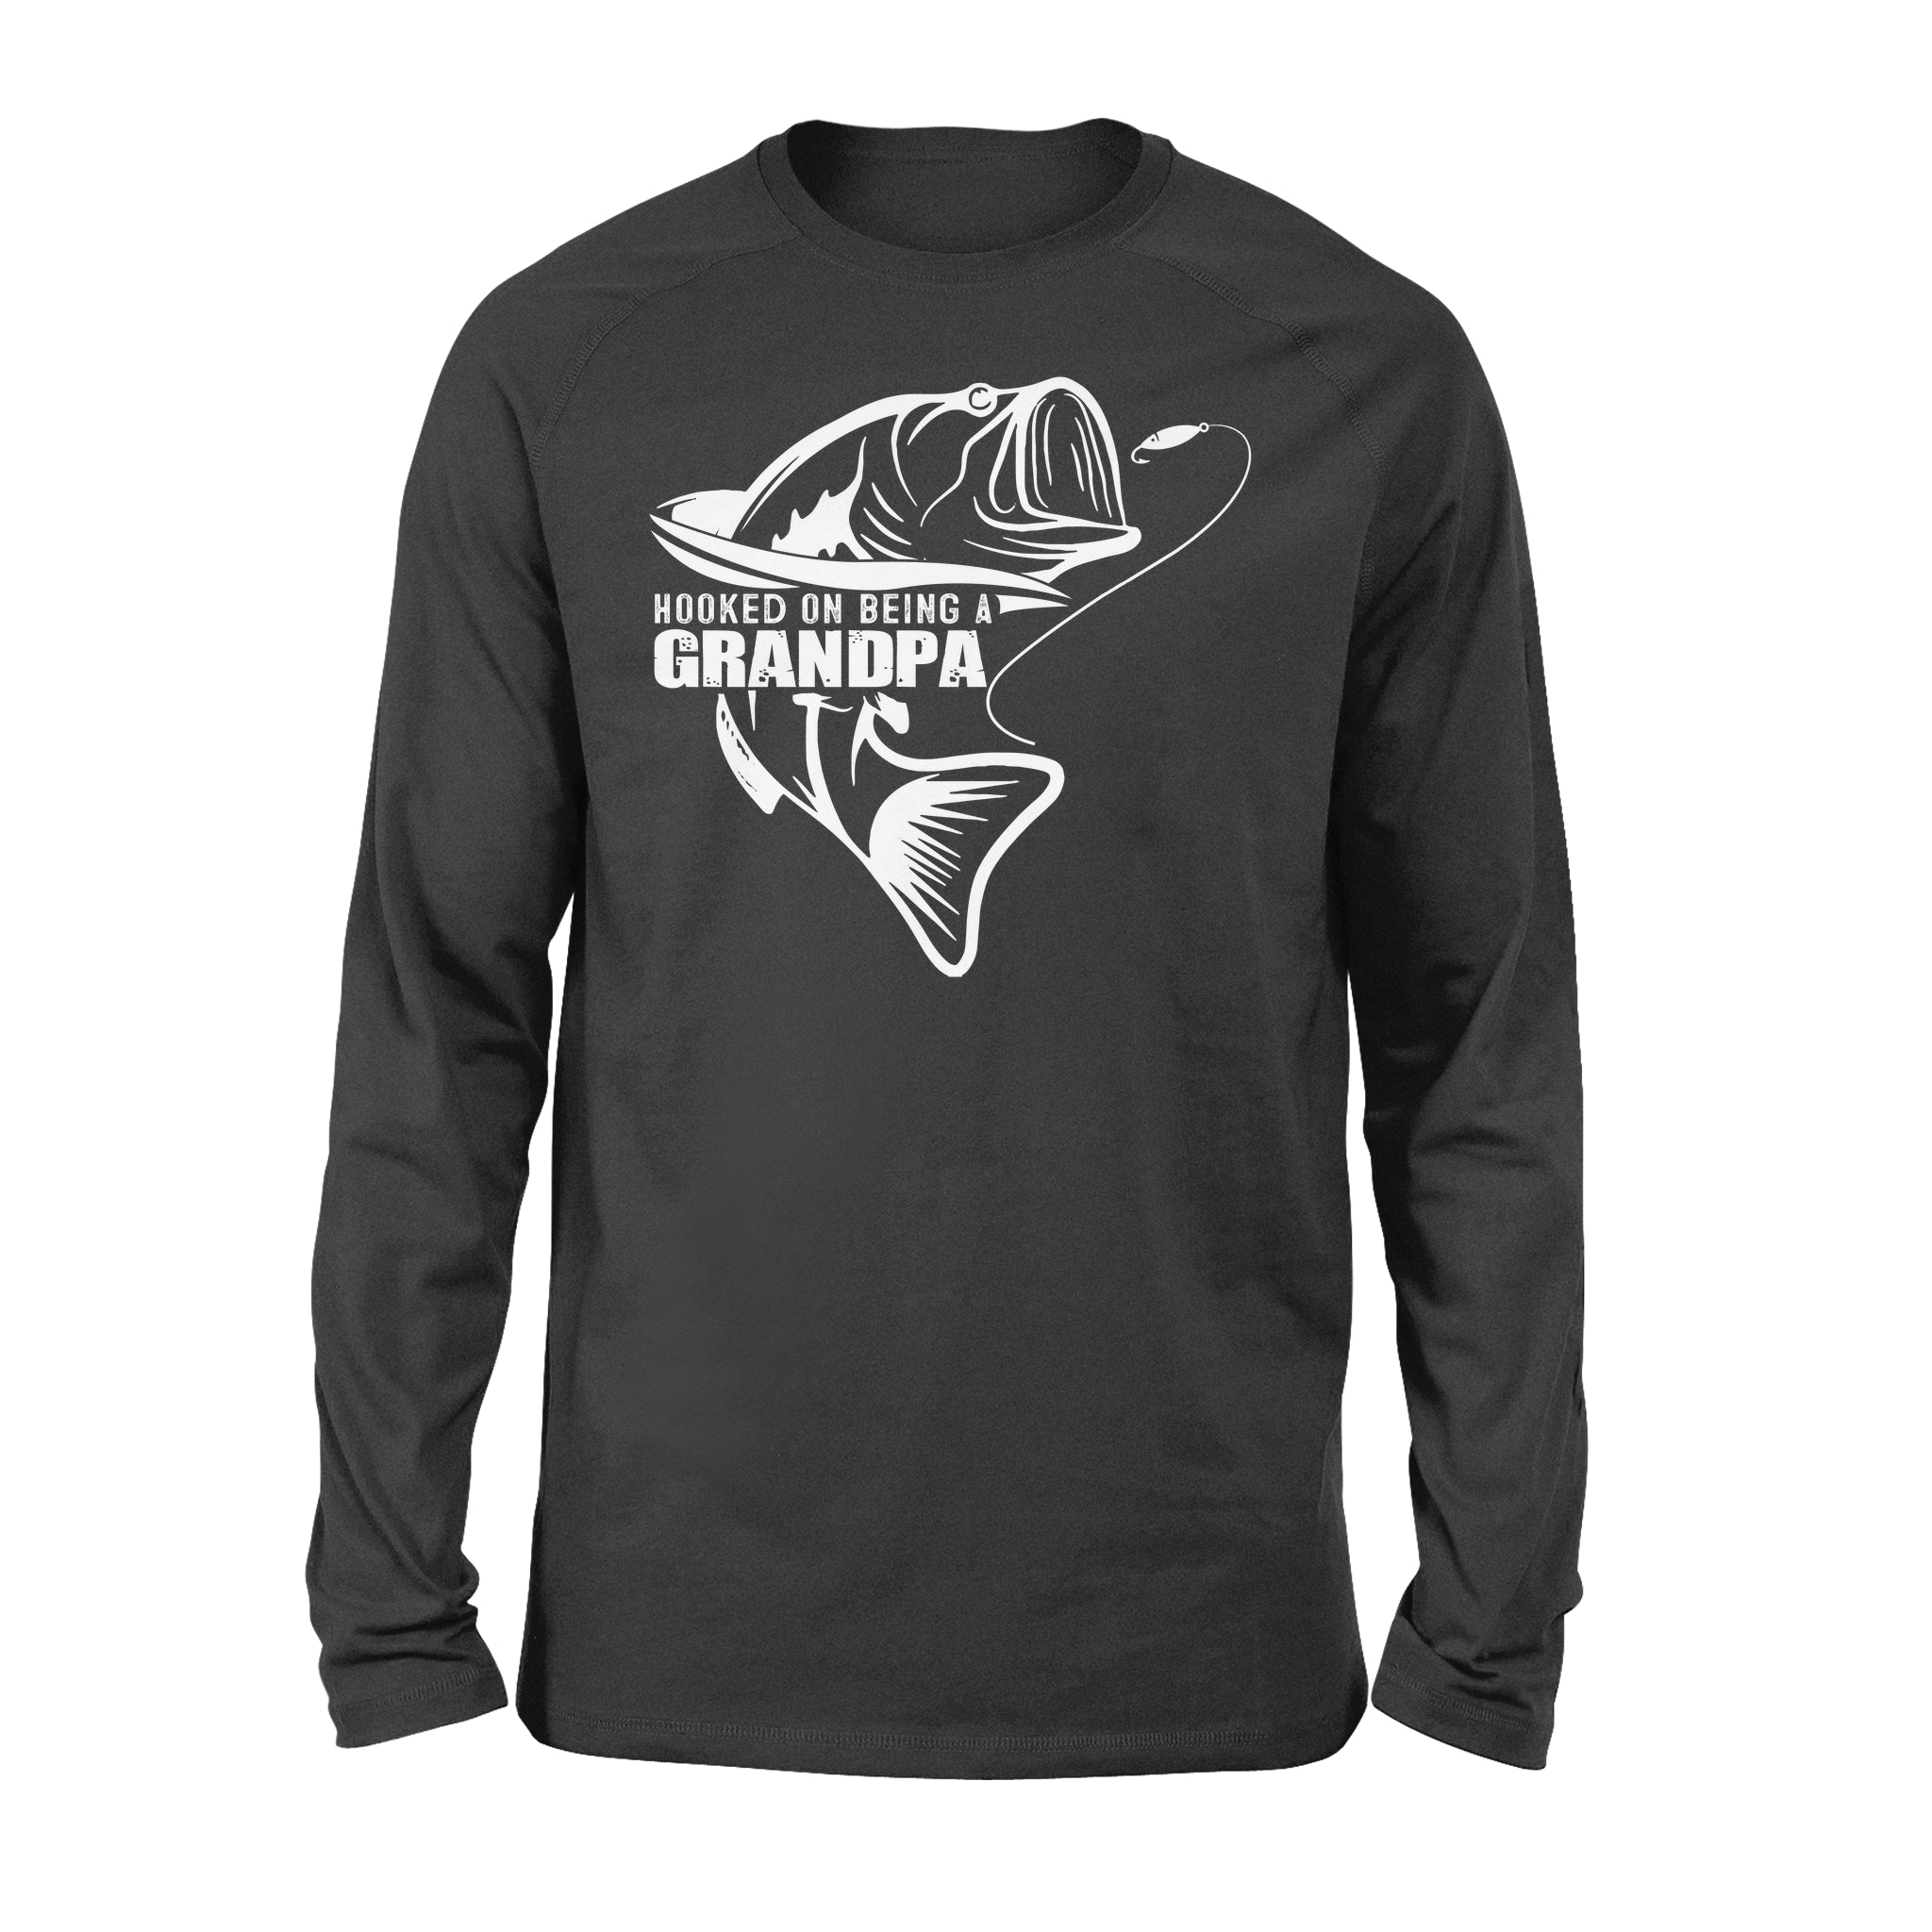 Grandpa Fishing Shirt, Hooked On Being A Grandpa, Funny Fishing Gift for Grandpa, Fathers Day Fishing Gift D02 NQS1335 - Standard Long Sleeve 4XL /